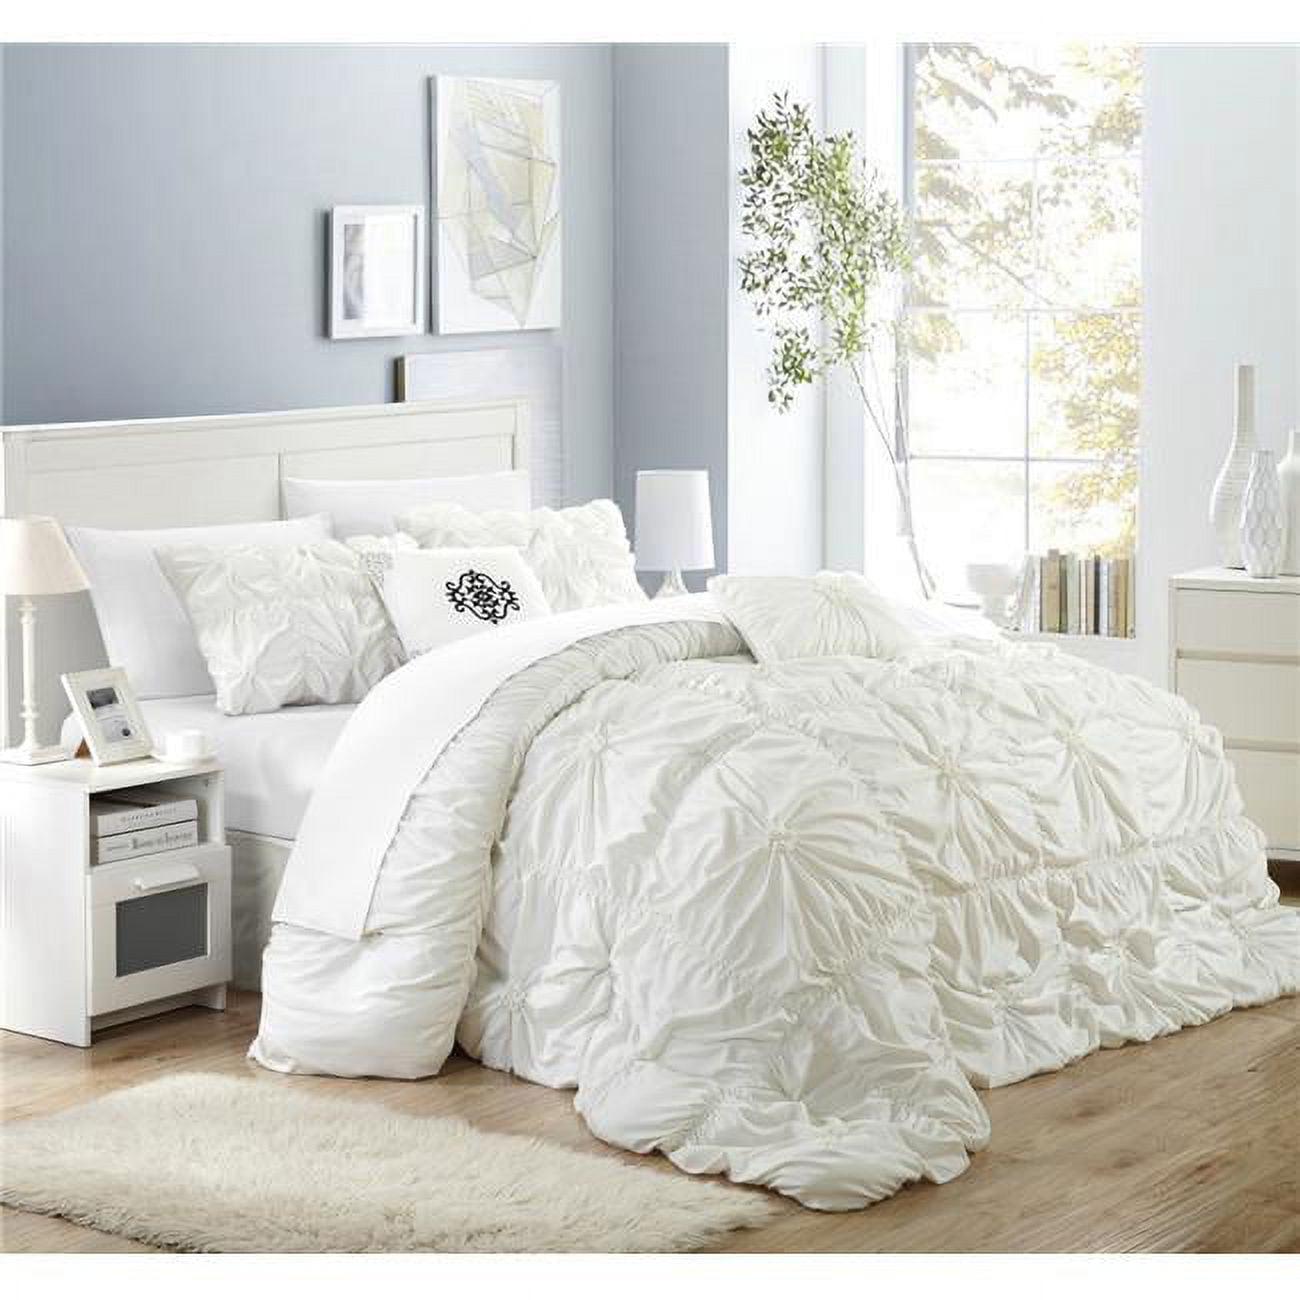 Ramanda Floral Pinch Pleat Ruffled Designer Embellished Comforter Set - White - Queen - 6 Piece